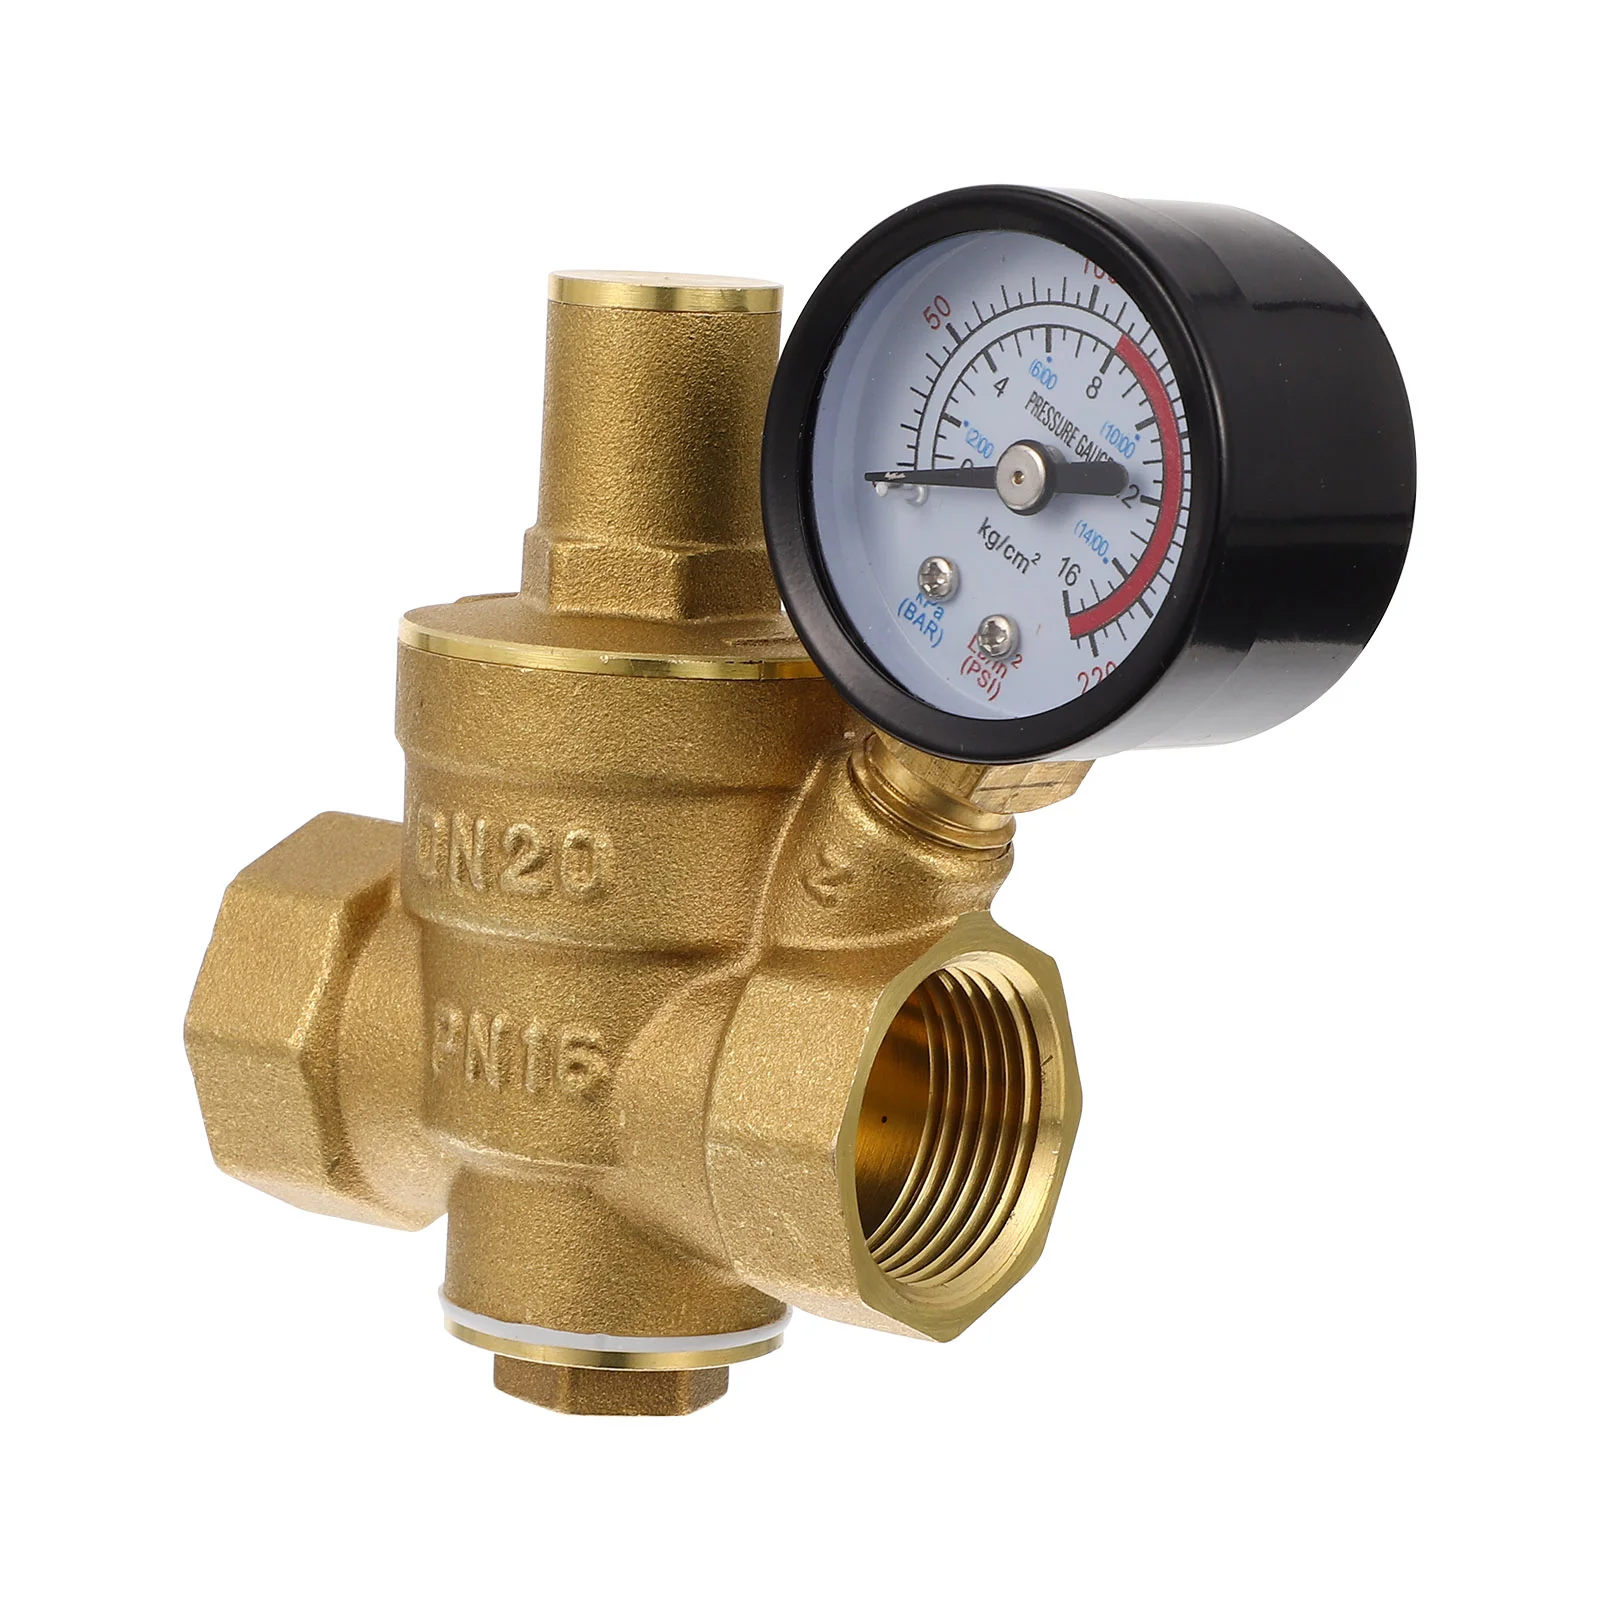 

UKCOCO 1PC DN20 Heavy Duty Adjustable Brass Water Pressure Reducing Regulator Valves with Water Pressure Meter Random Style